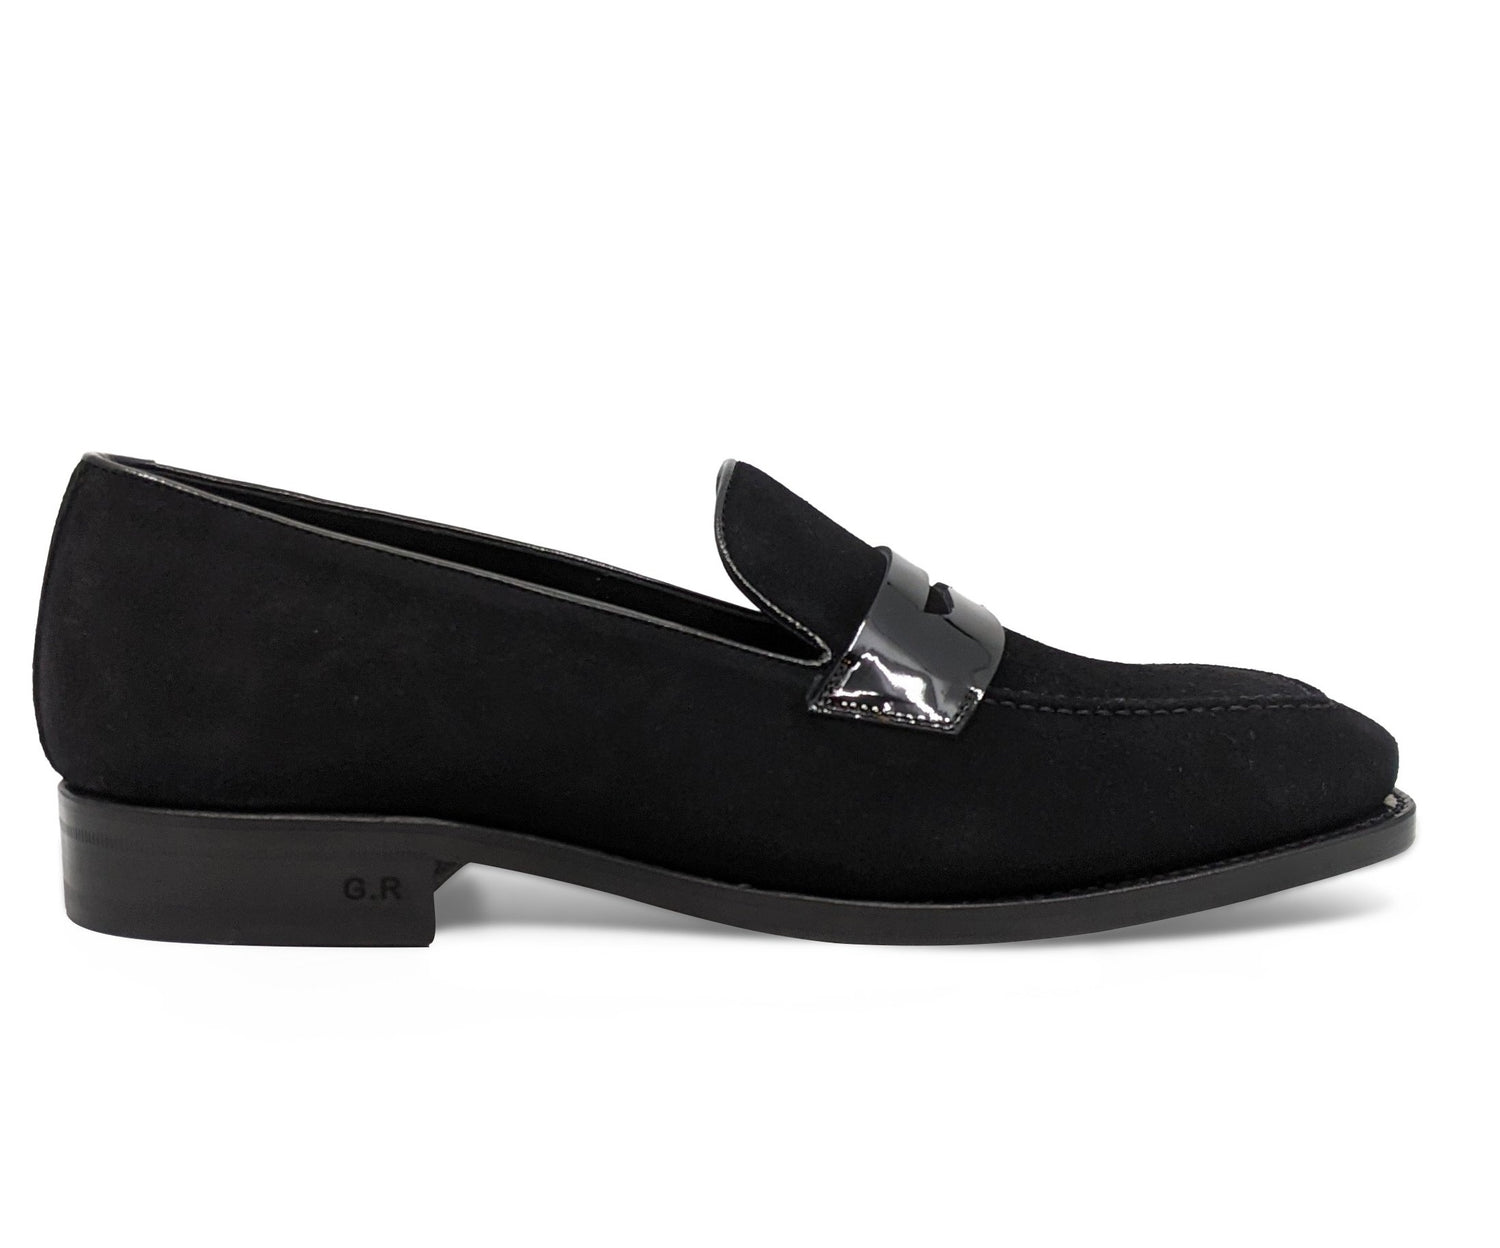 Black suede patent leather loafer mens formal shoes Goodyear Welt designer quality wedding loafer tuxedo